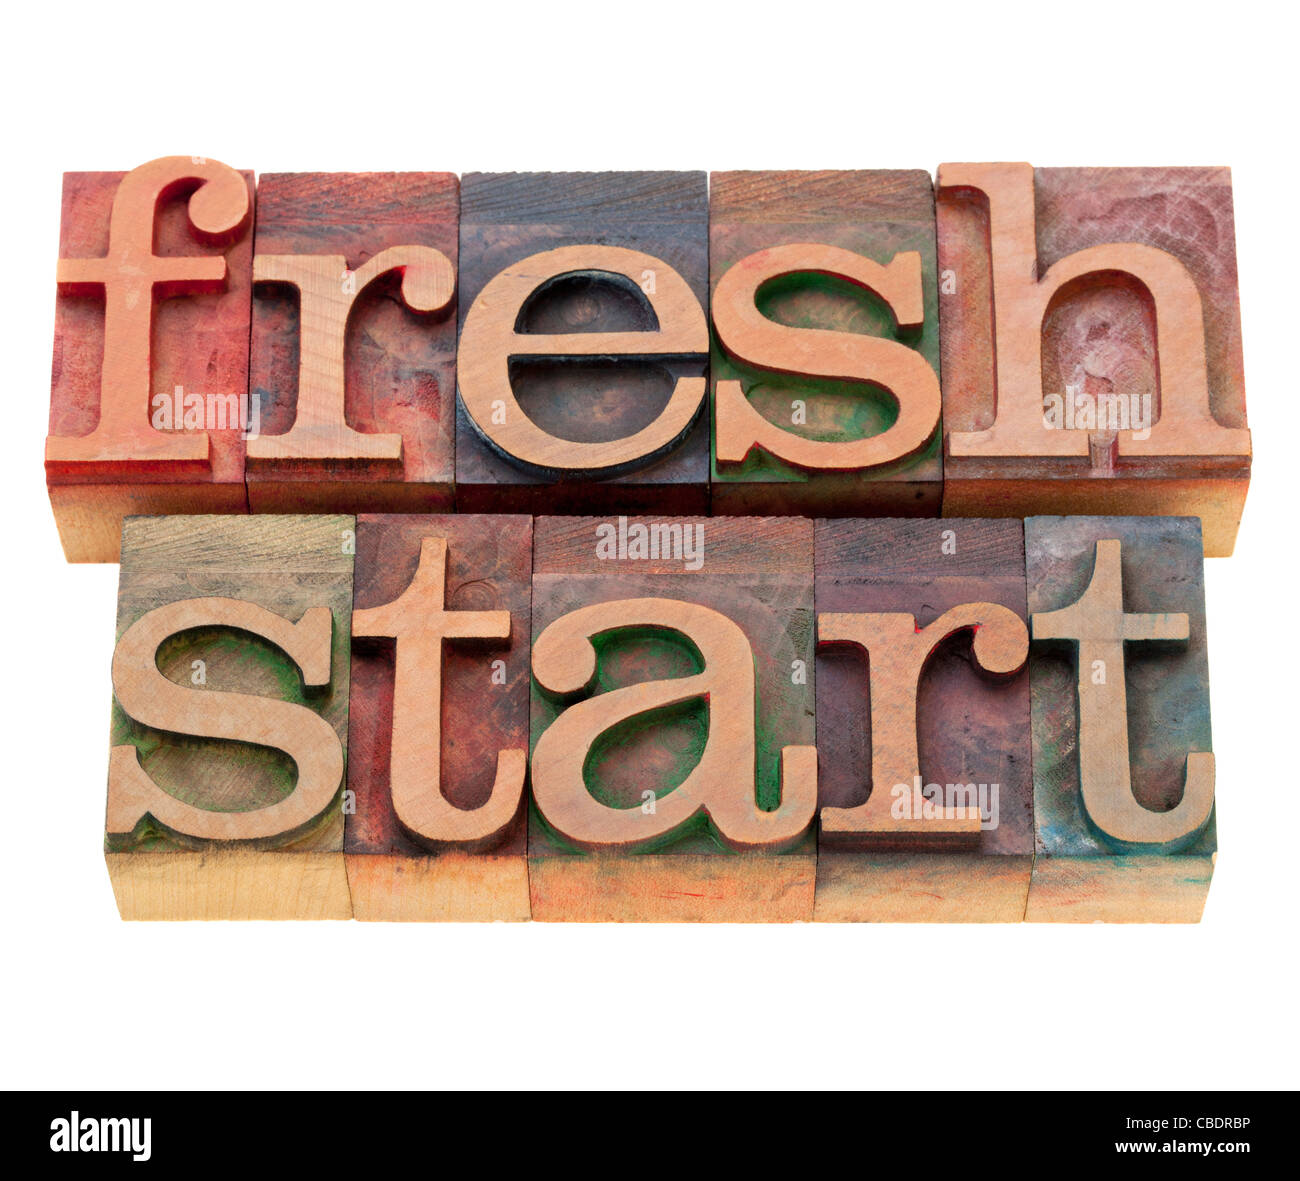 fresh start - isolated words in vintage wood letterpress printing blocks Stock Photo